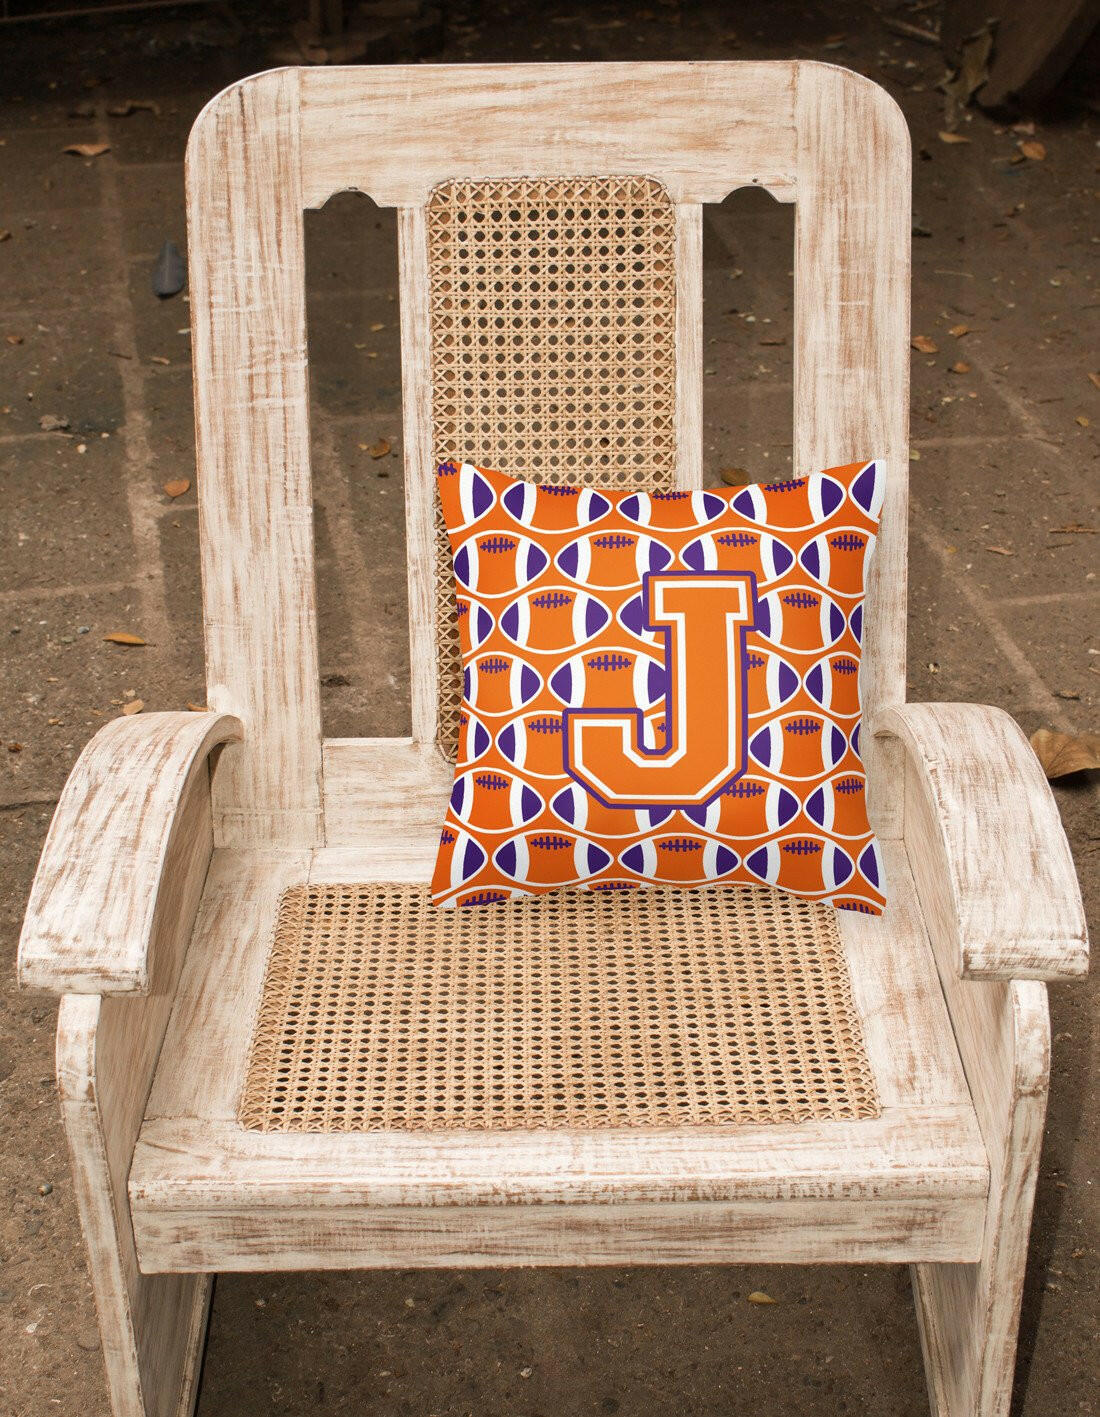 Letter J Football Orange, White and Regalia Fabric Decorative Pillow CJ1072-JPW1414 by Caroline's Treasures